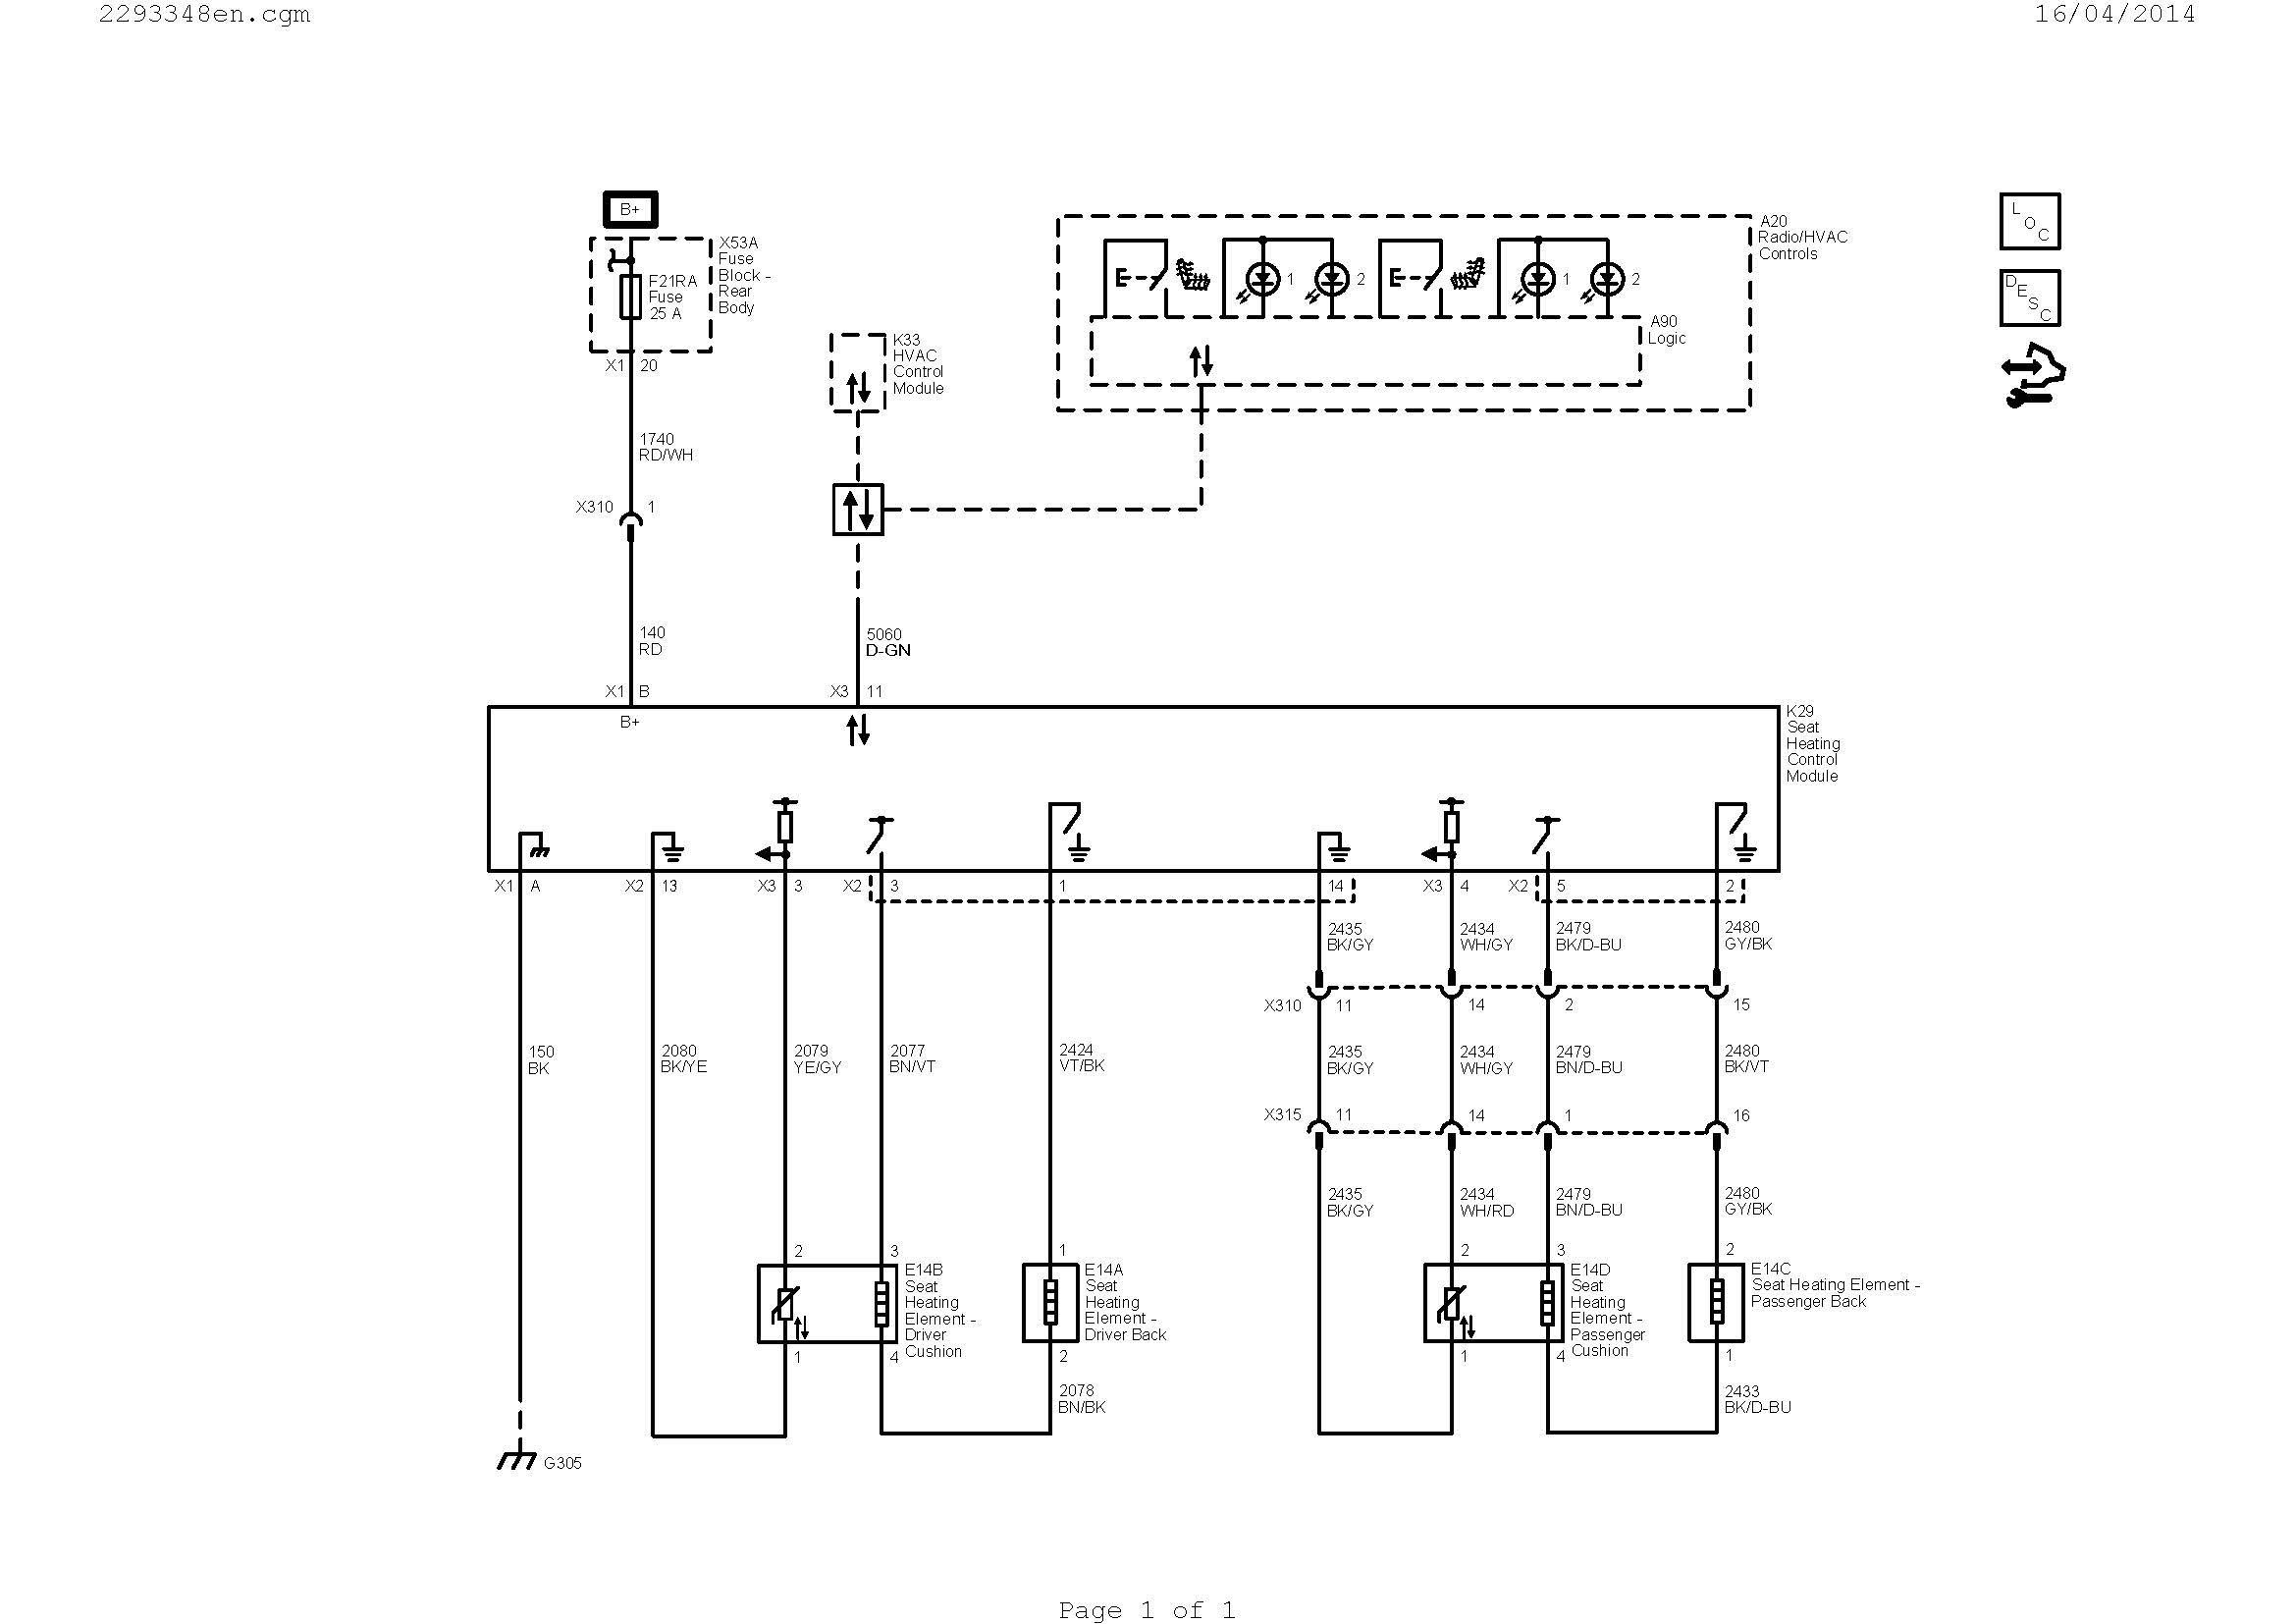 Engine Layout Diagram House Wiring Diagram Layout Simple 7 Wire thermostat Wiring Diagram Of Engine Layout Diagram